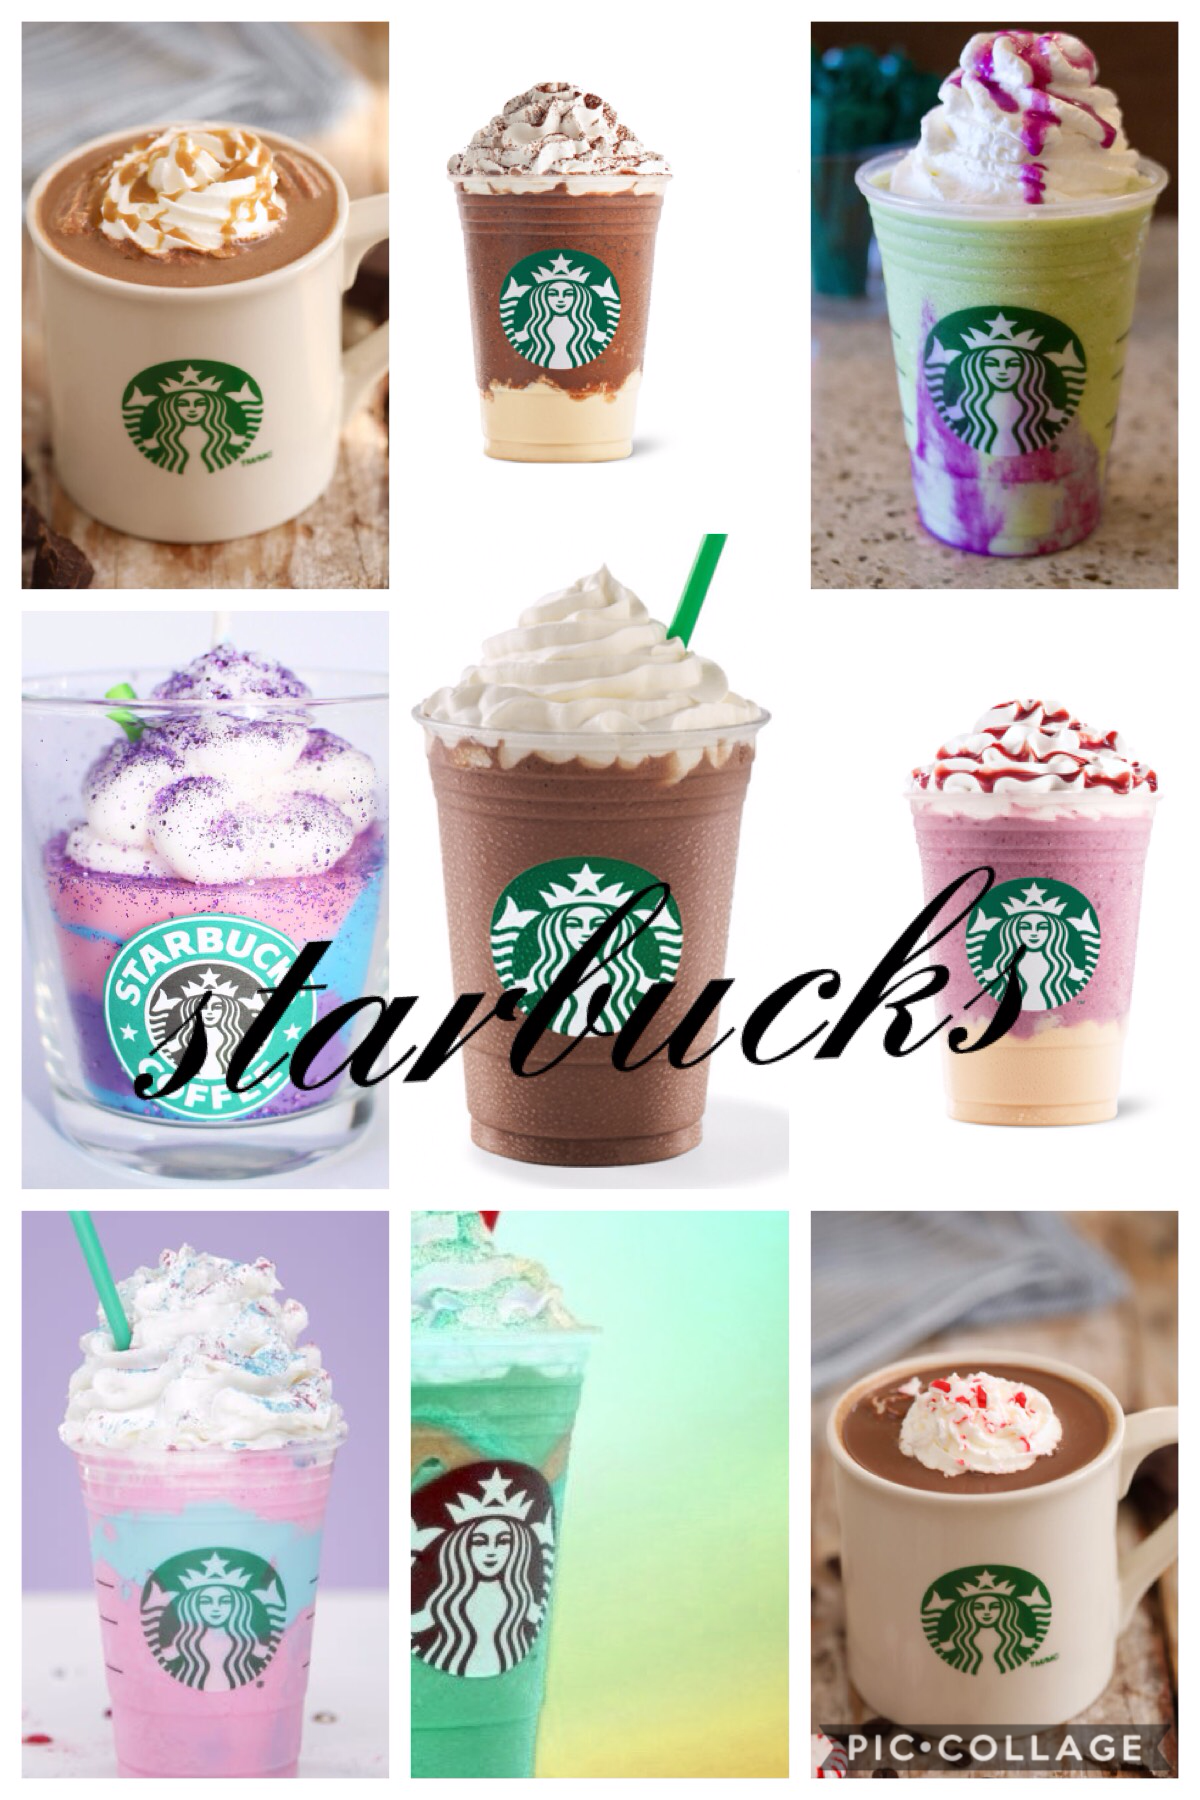 Starbucks 